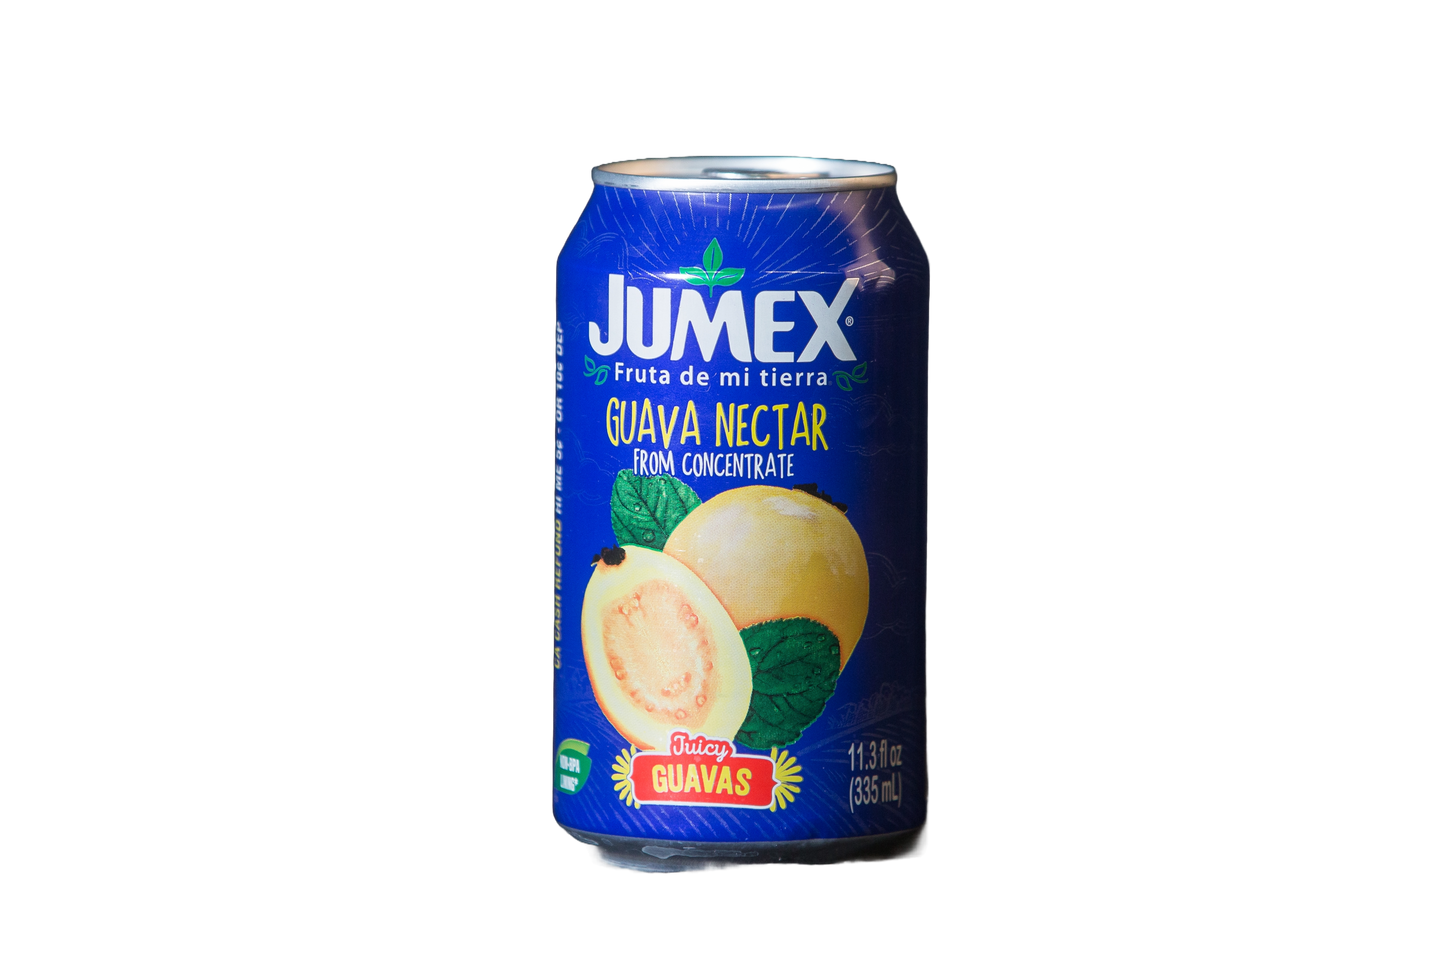 Jumex Guava Nectar, 11.3 fl oz